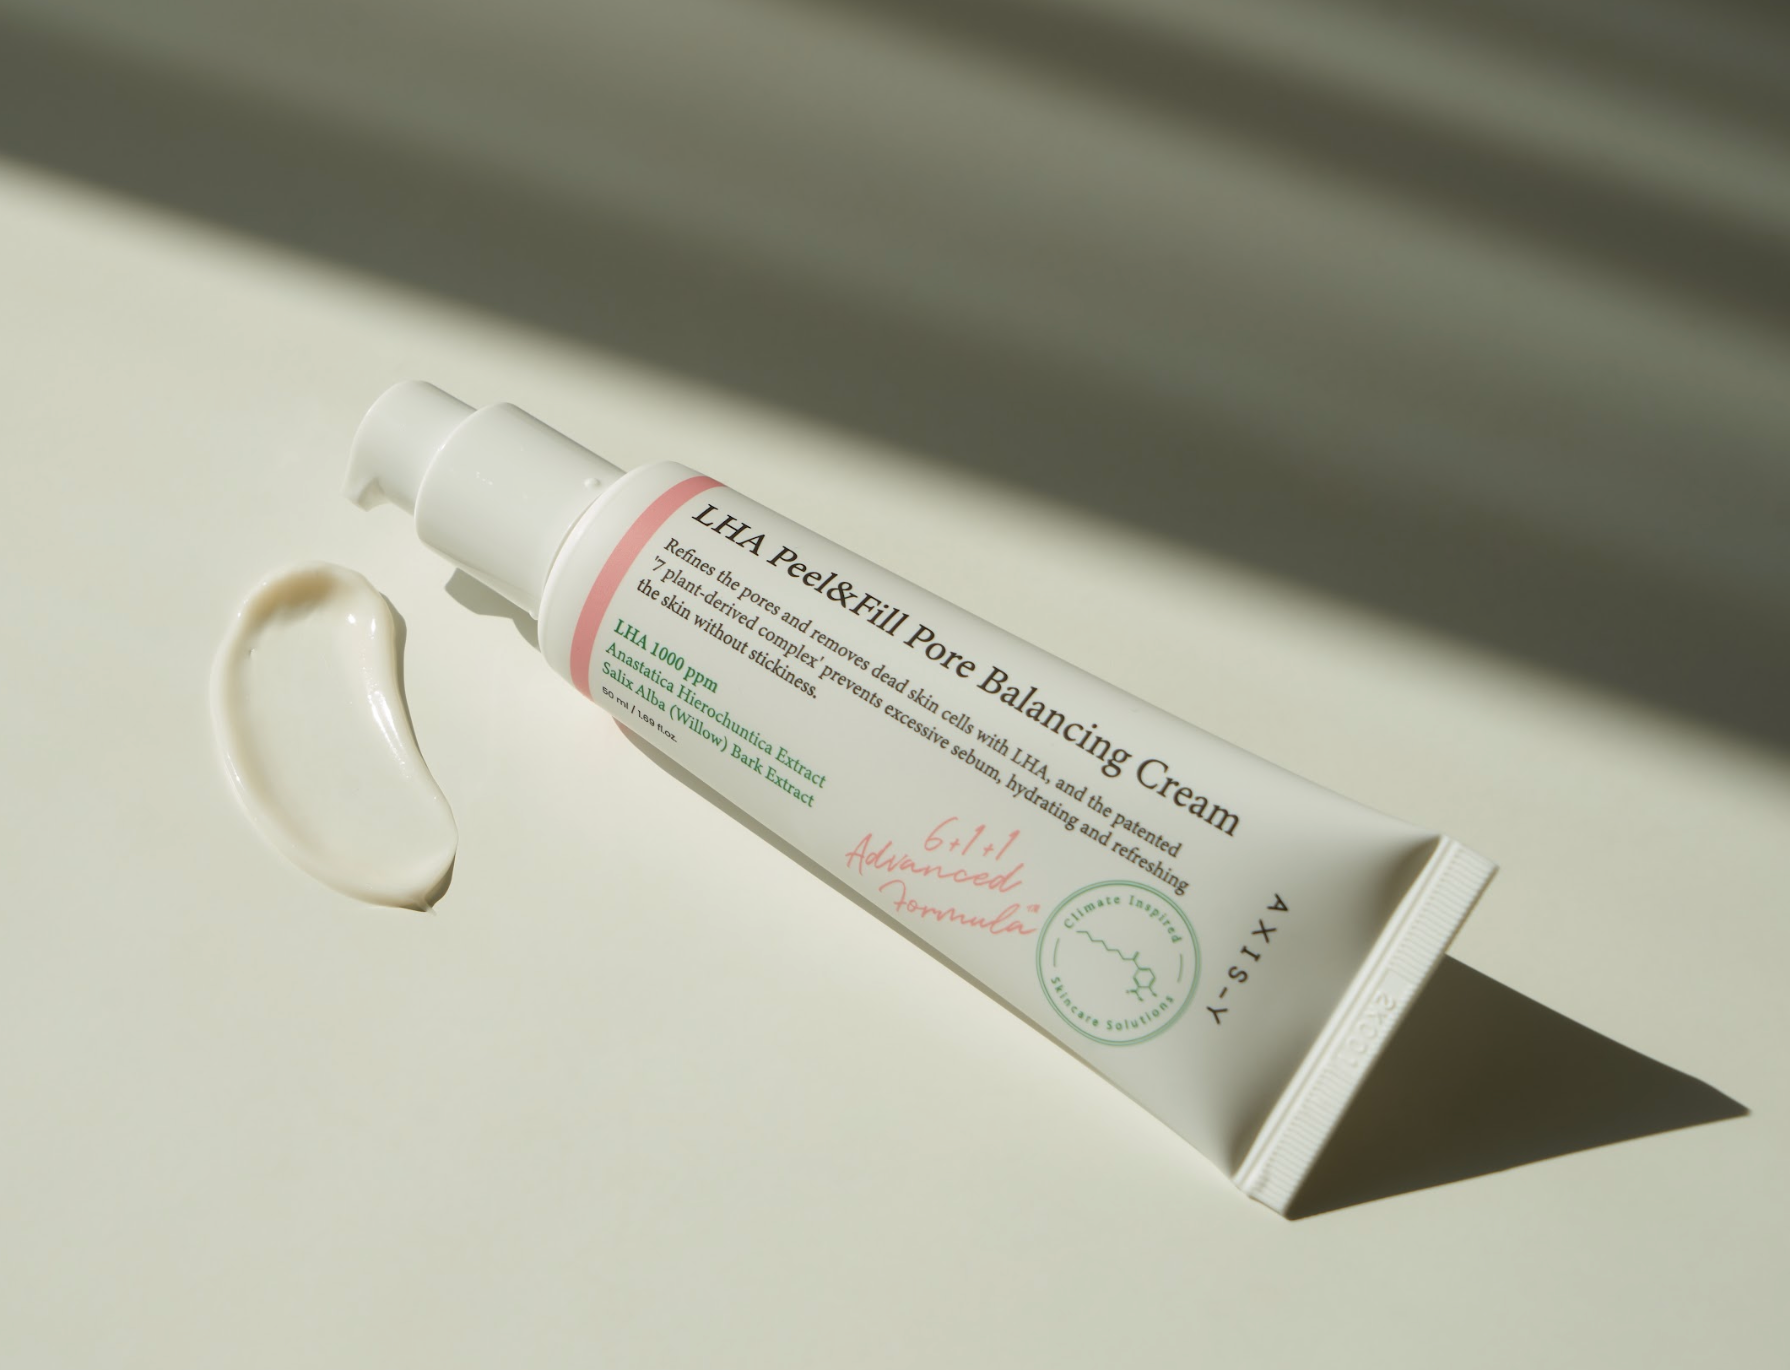 Axis-Y LHA Peel & Fill Pore Balancing Cream 50ml - Beauty Barn